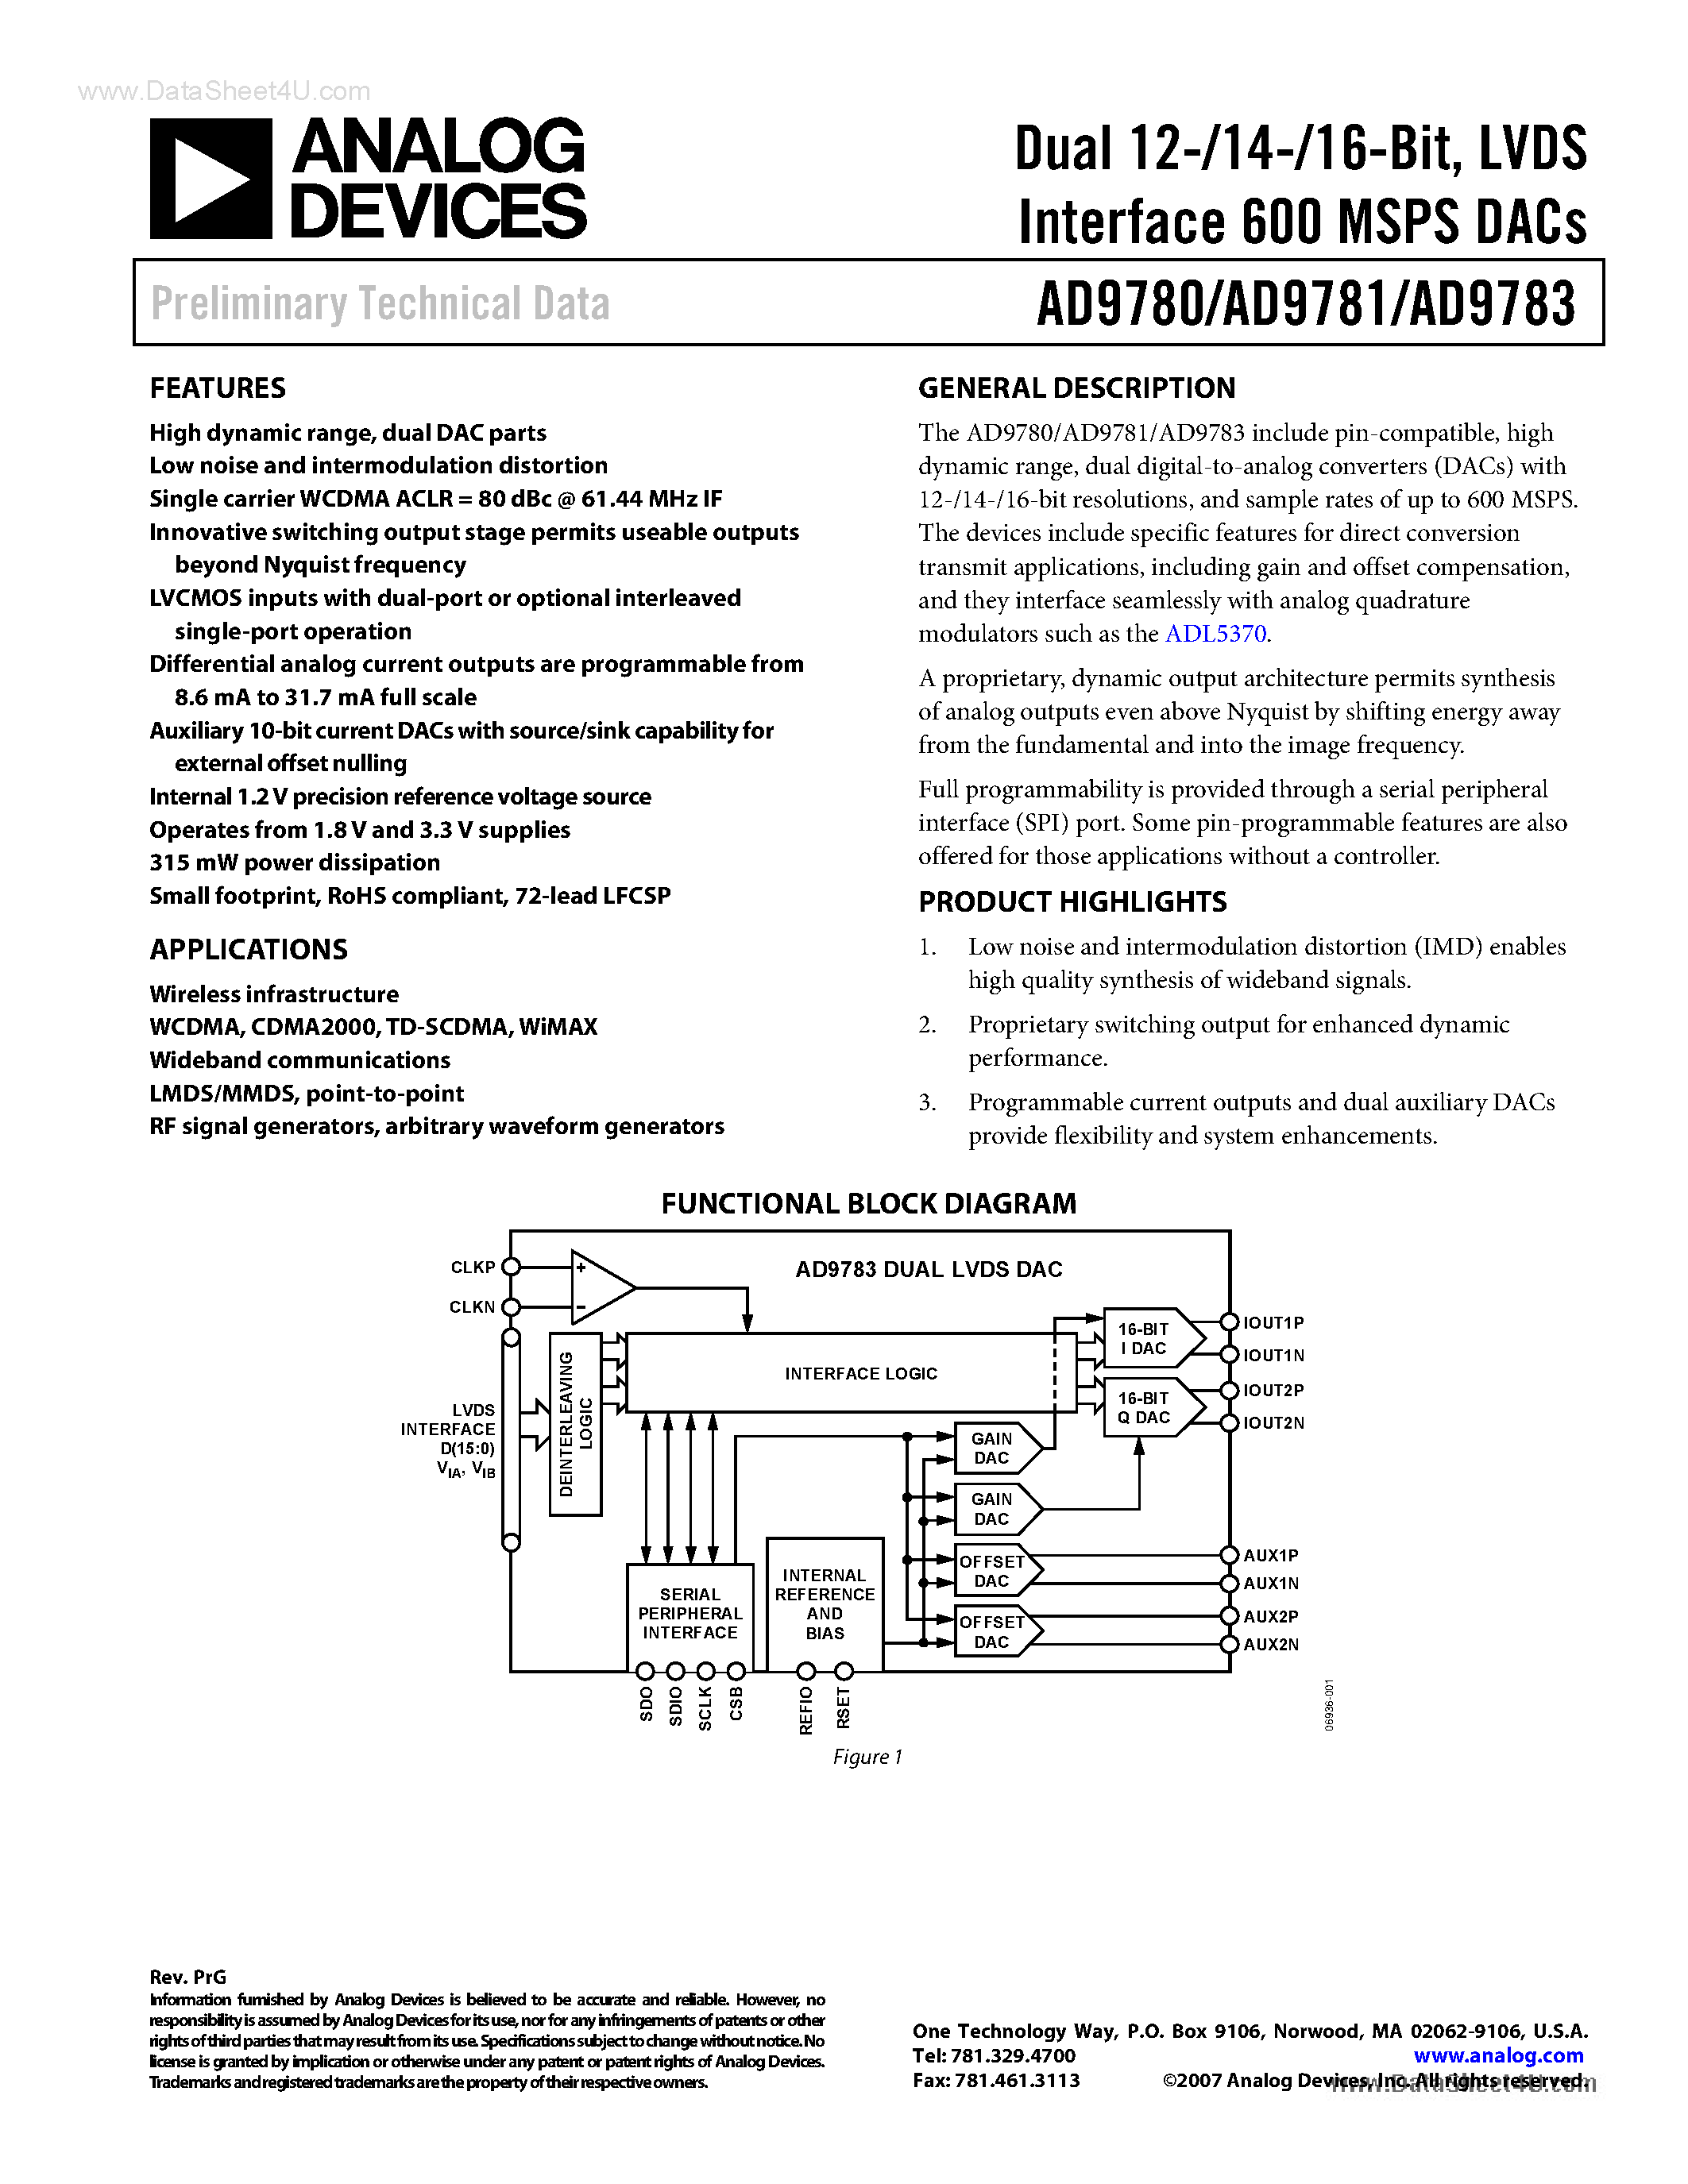 Даташит AD9780 - (AD9780 - AD9783) LVDS Interface 600 MSPS DACs страница 1